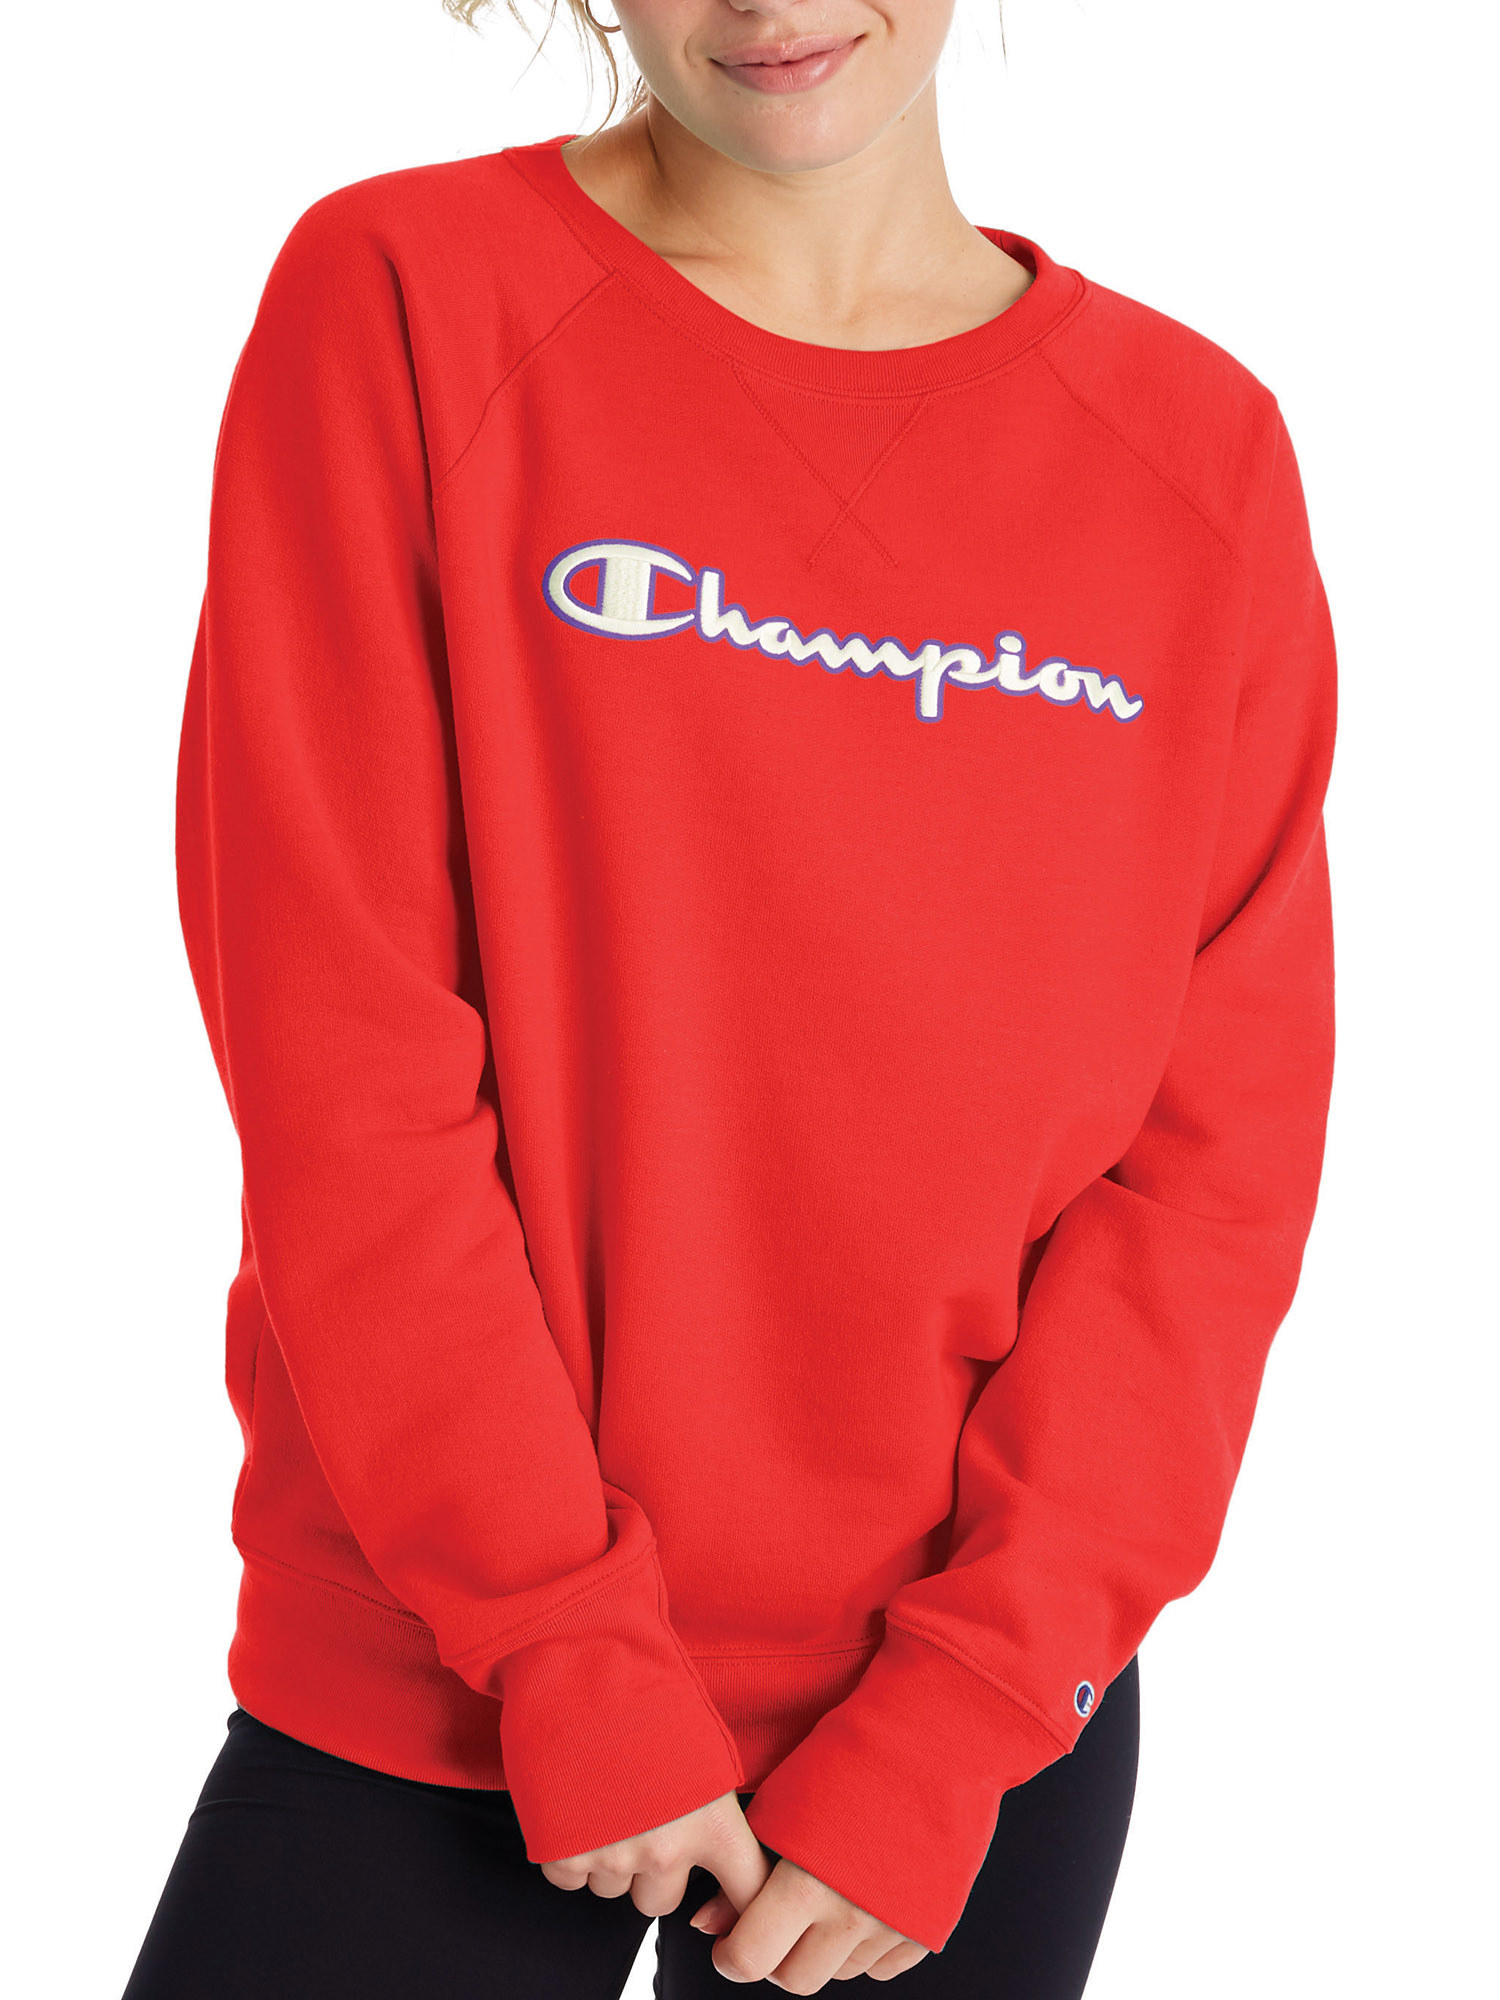 The red Champion sweartshirt